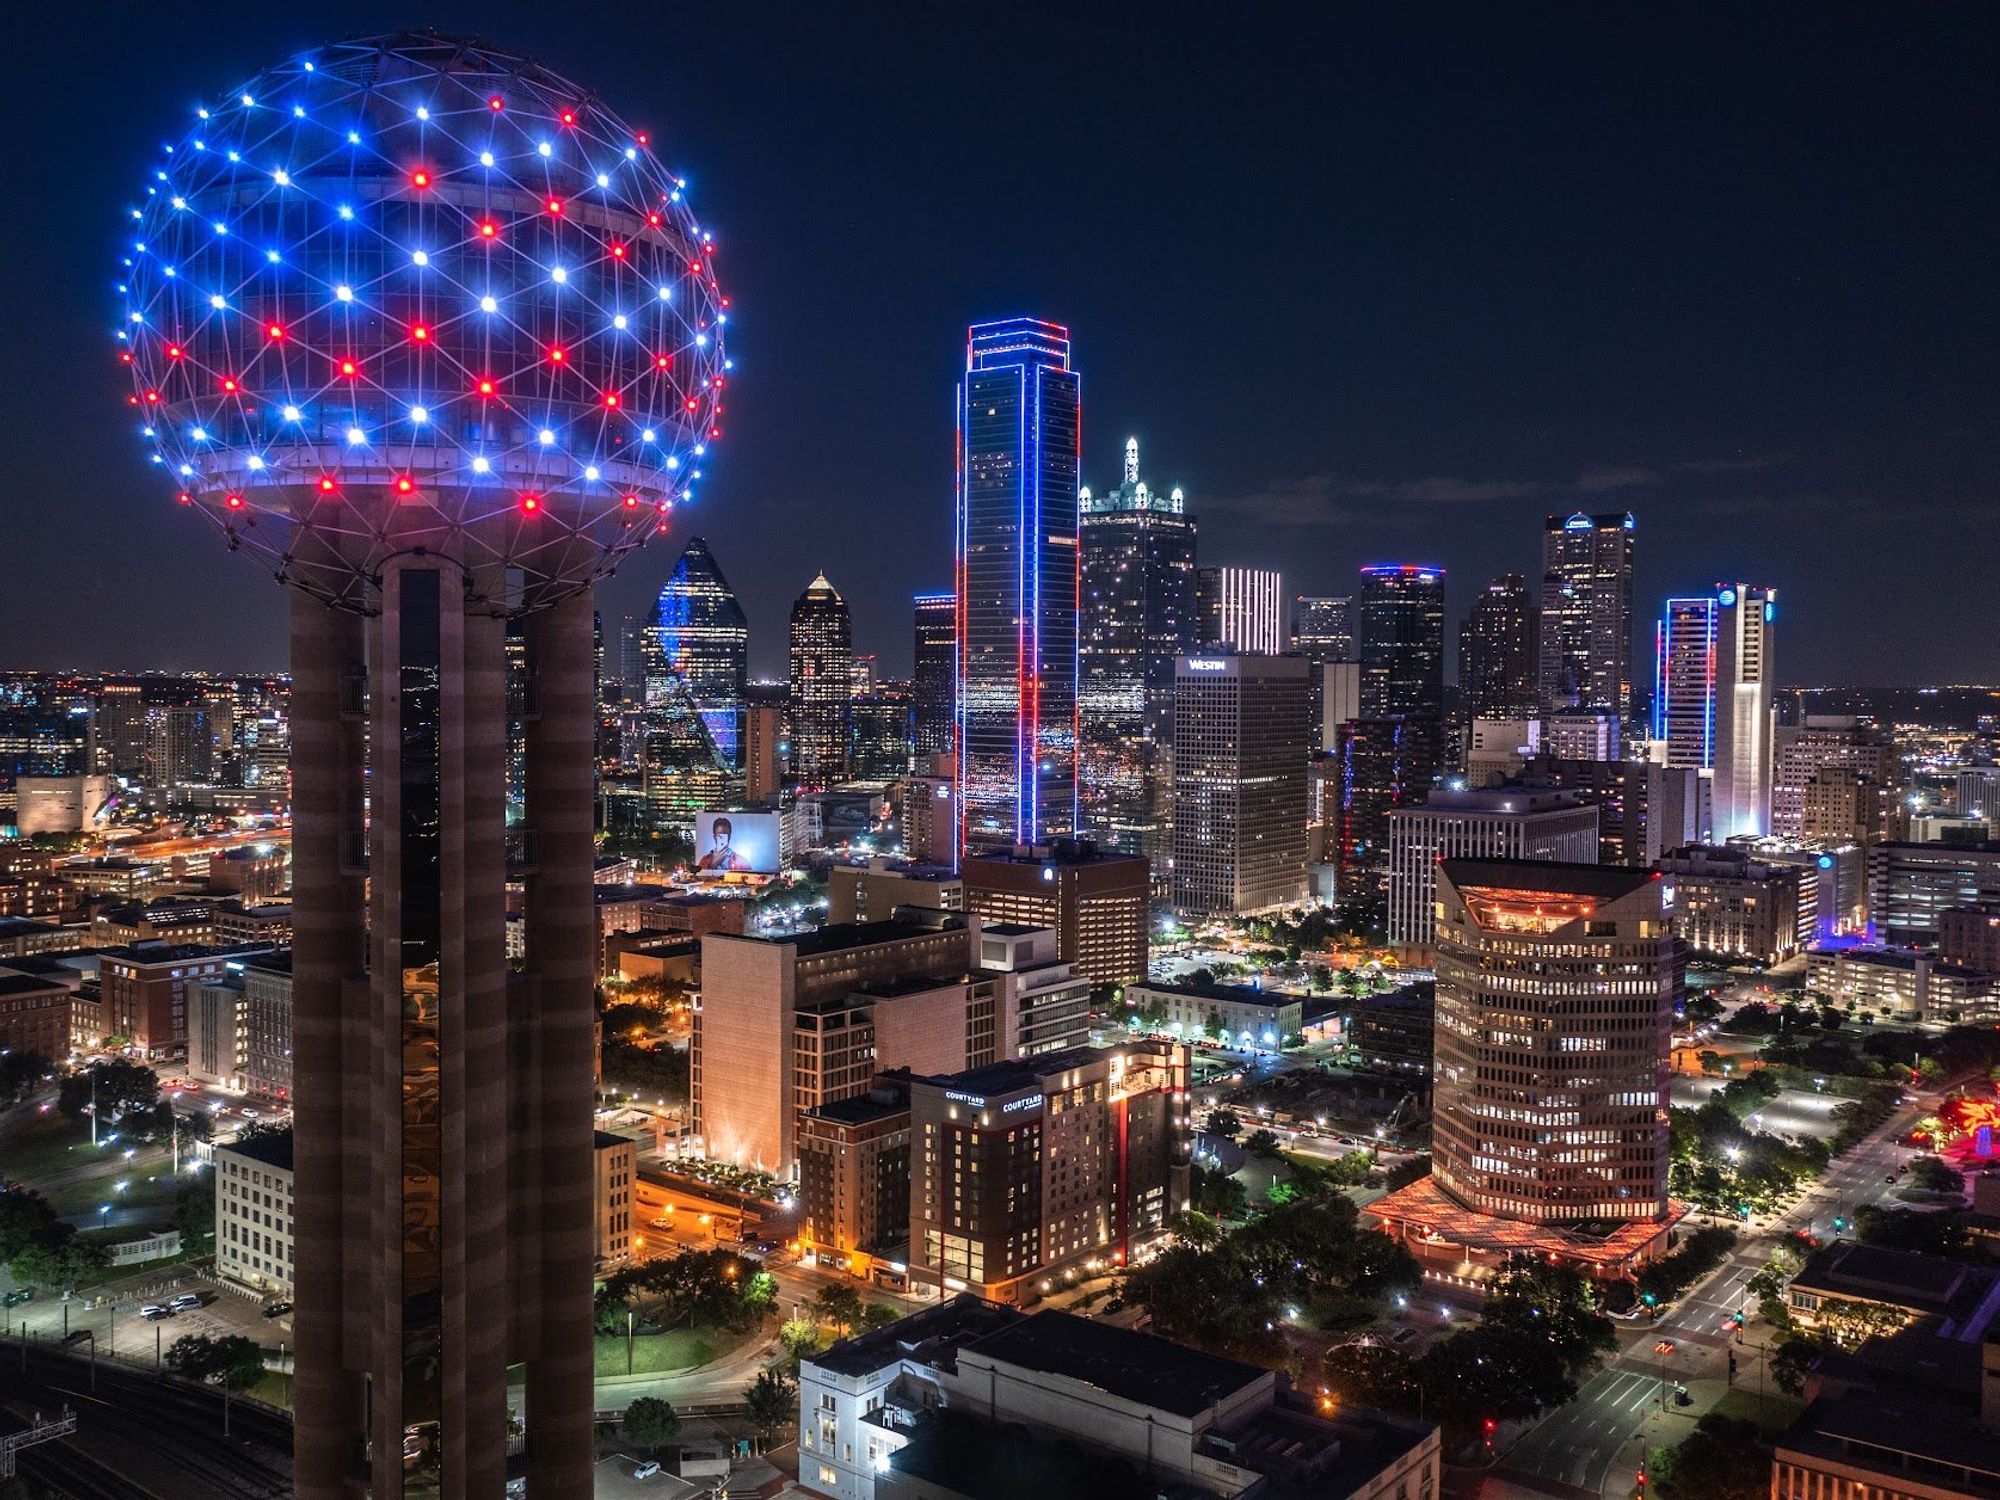 Downtown Dallas skyline lit